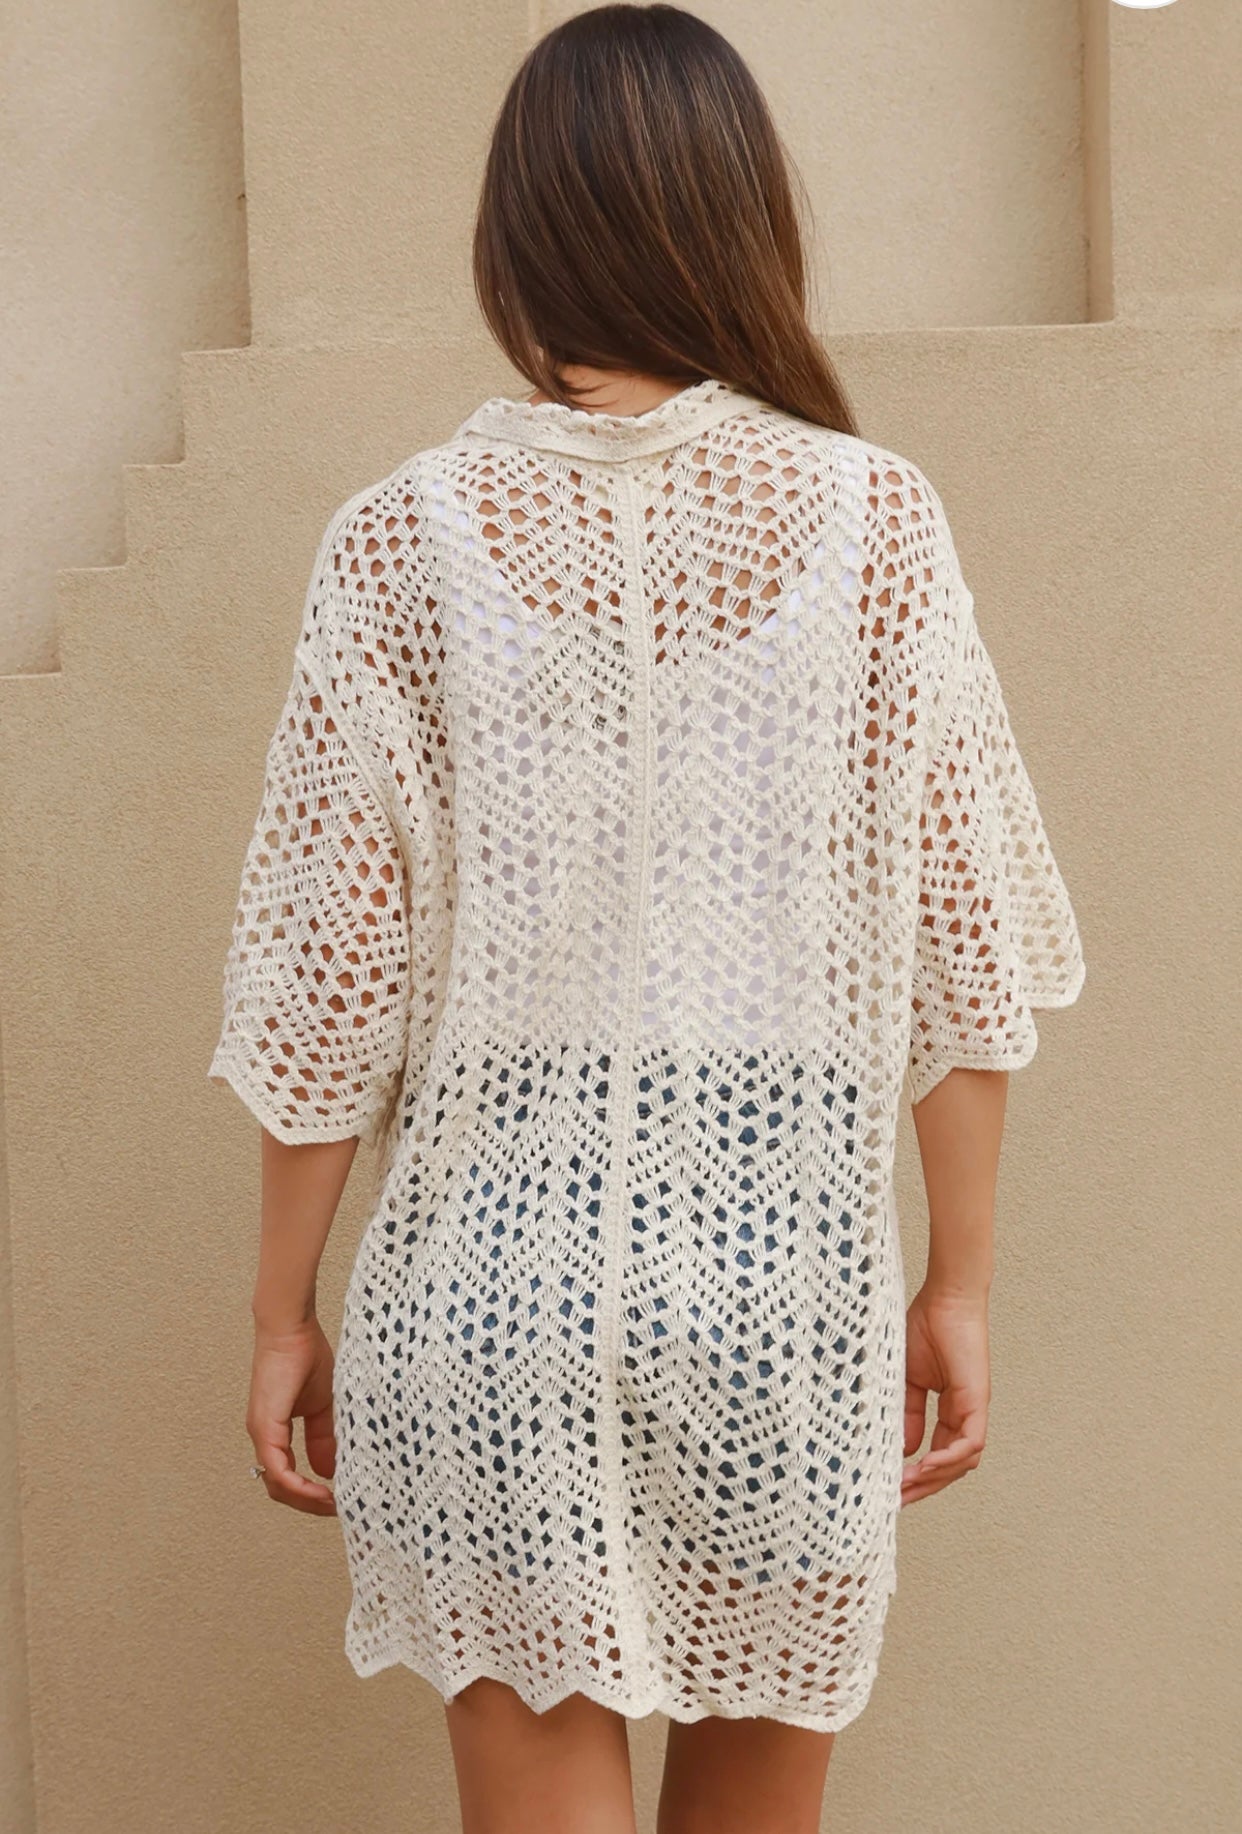 Lilly Design Button Shirt Dress crochet lace cotton